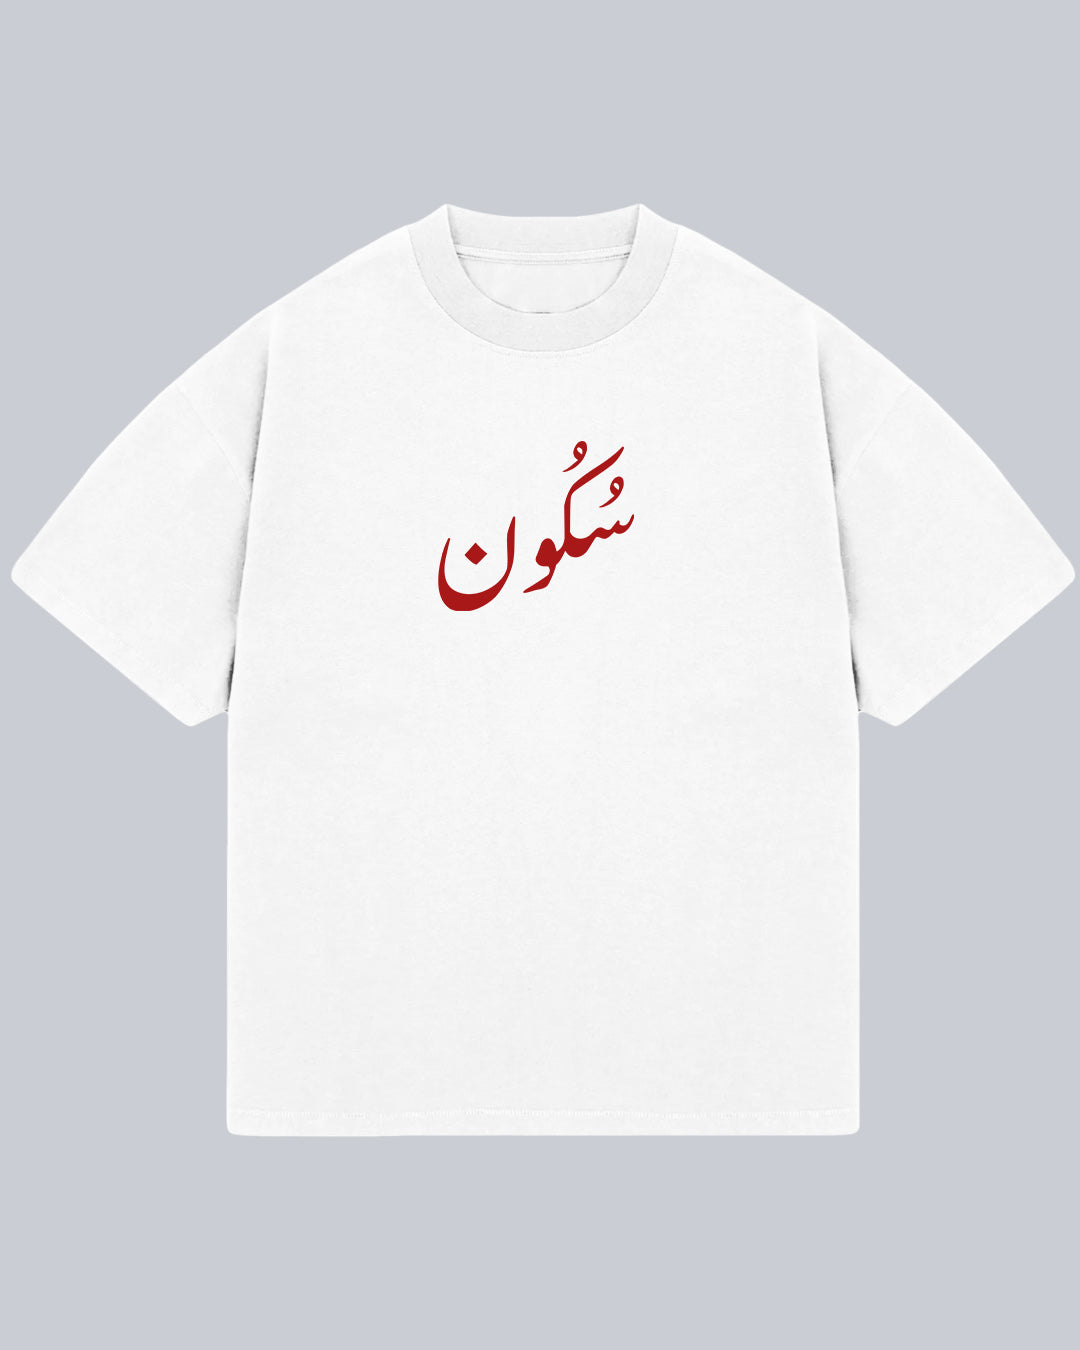 Sukoon Urdu Oversized Tshirt